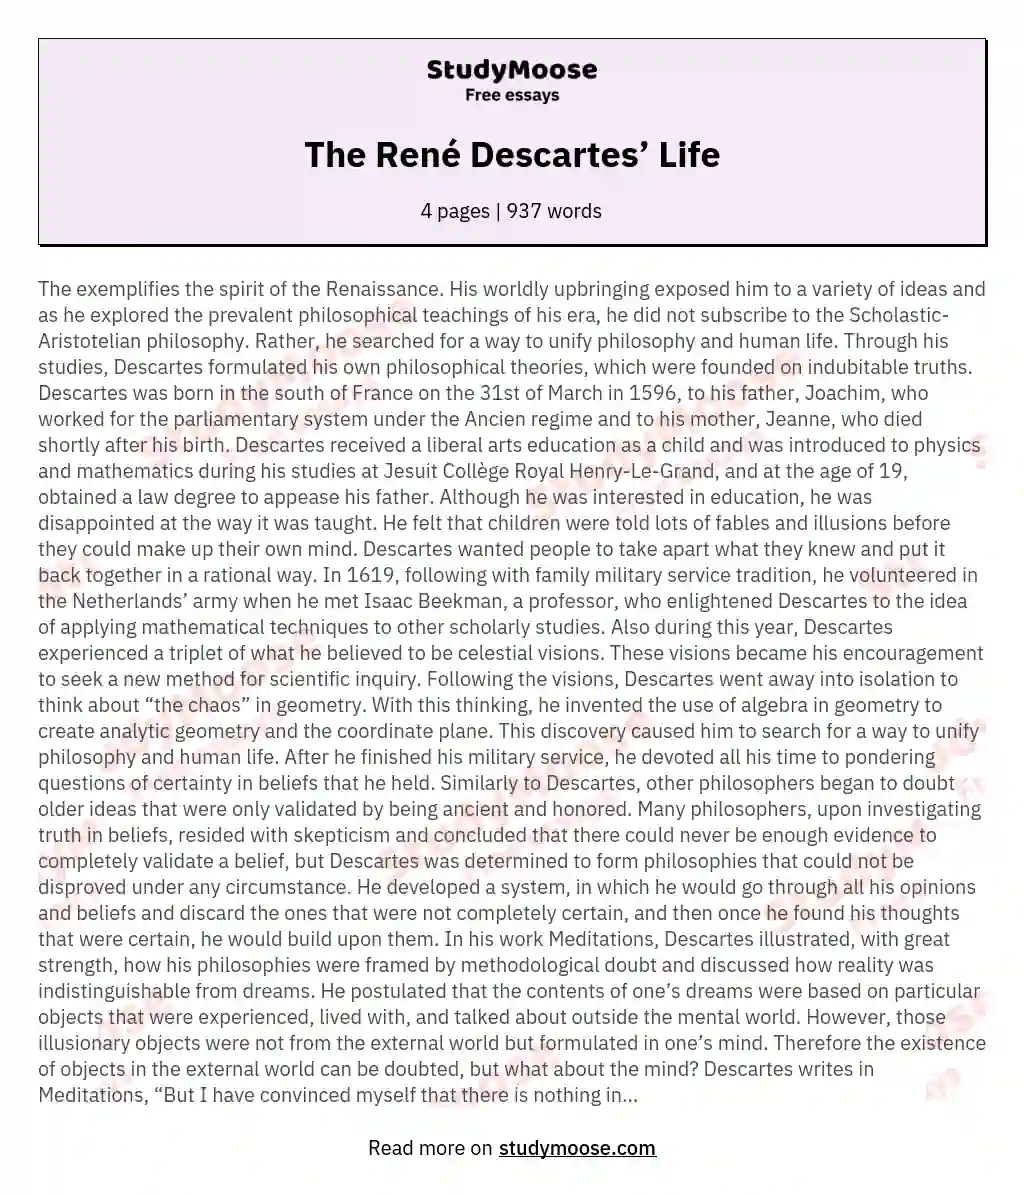 The René Descartes’ Life essay